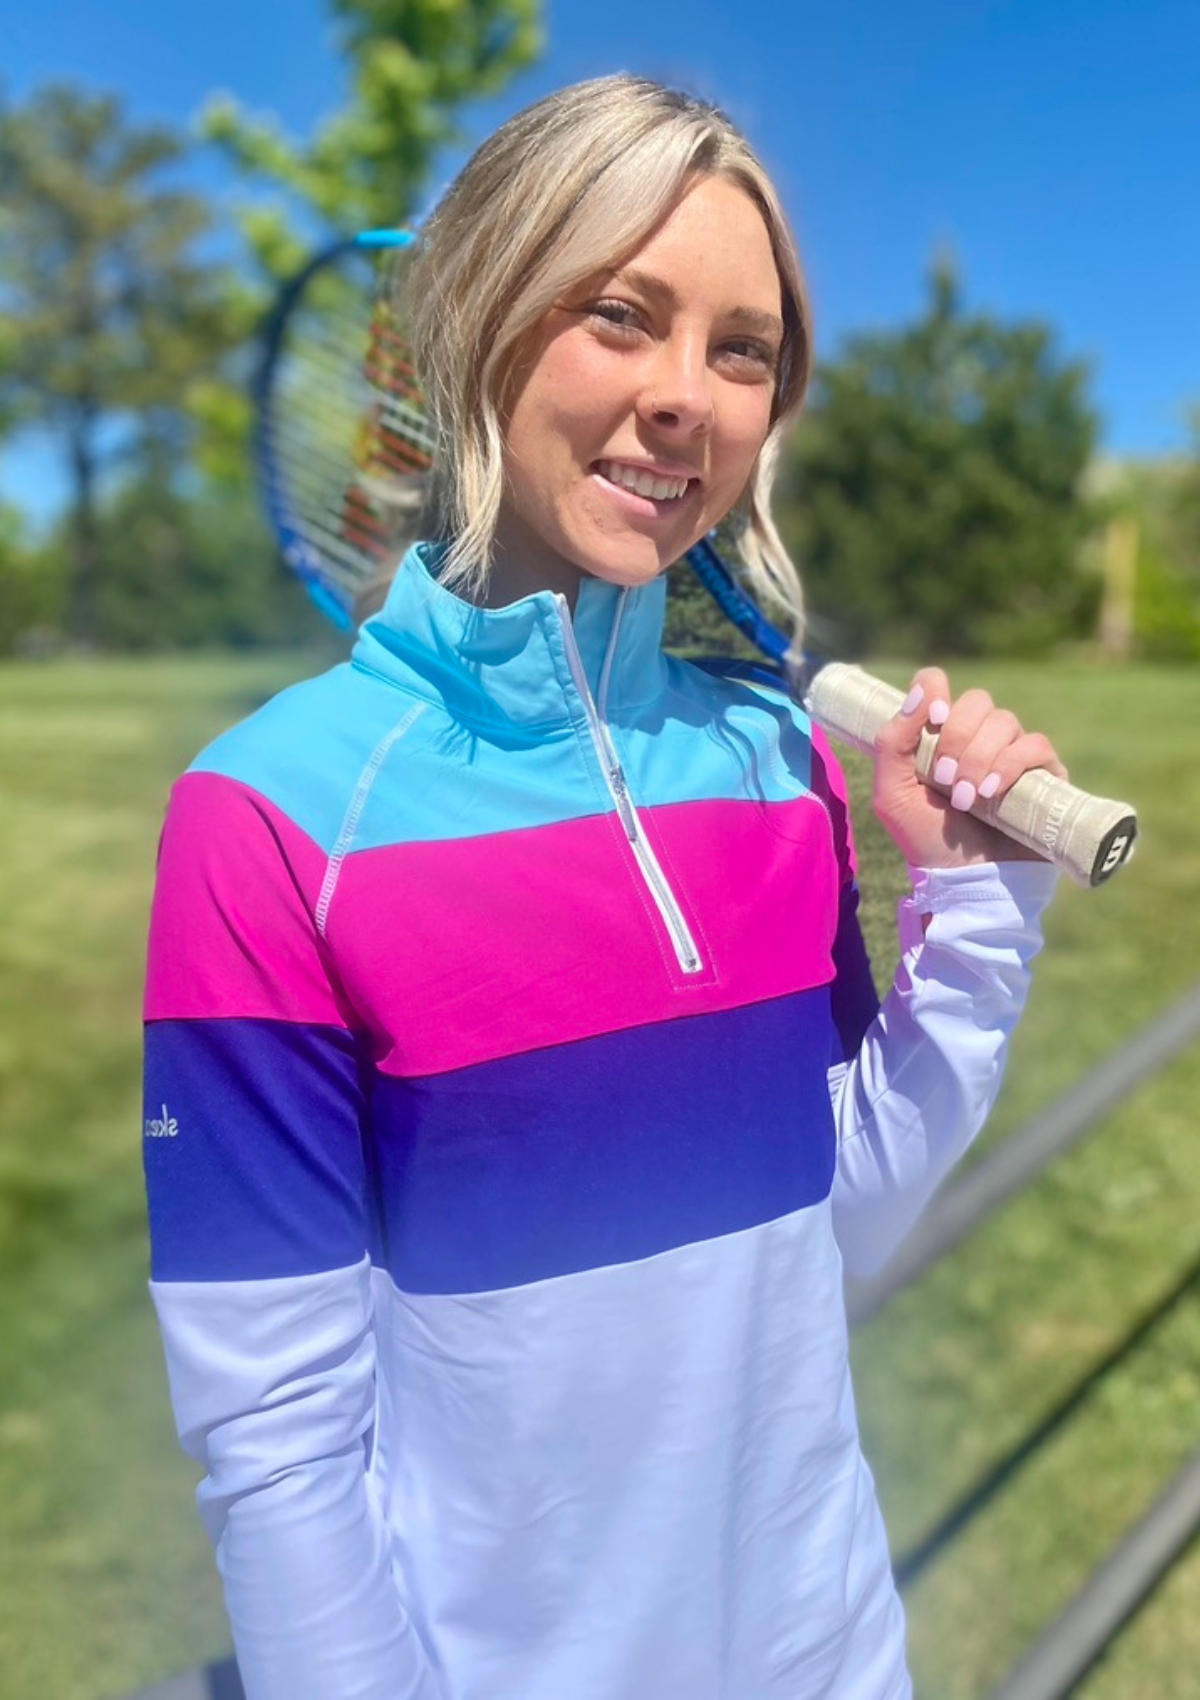 Woman tennis player courtside in woods wearing striped half-zip longsleeve top